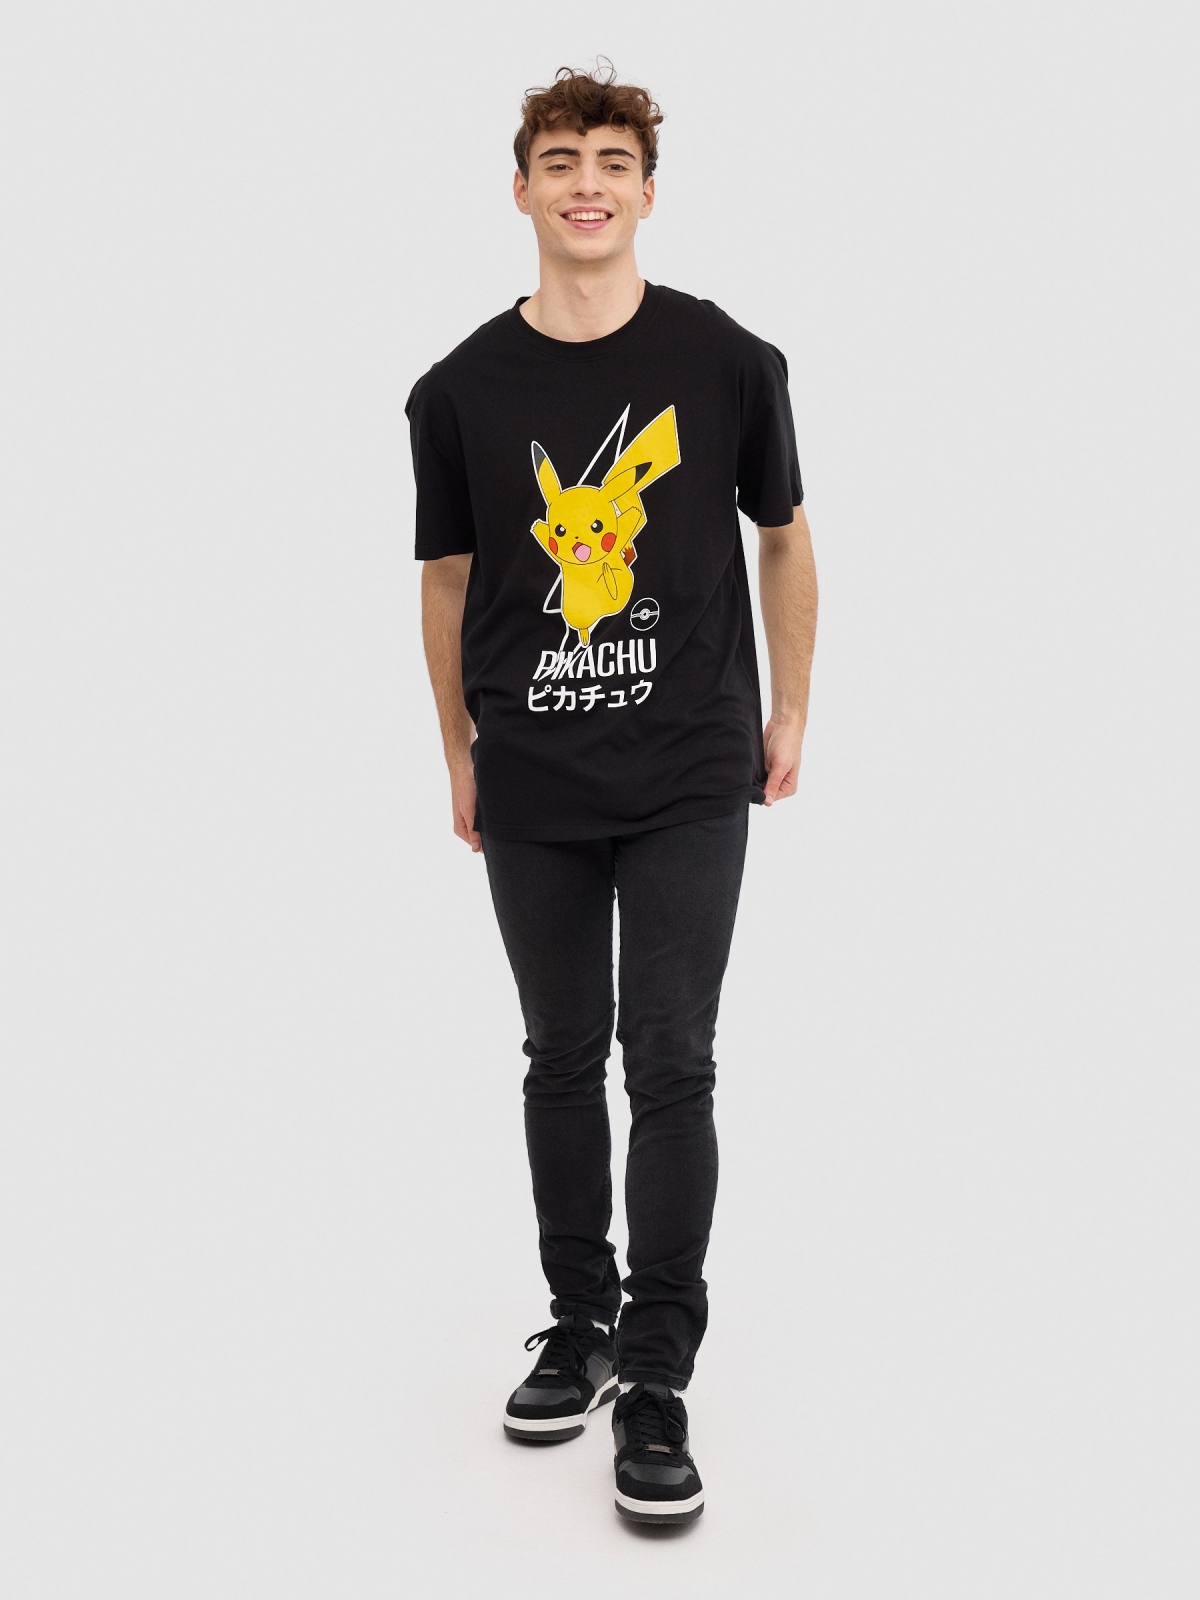 Pikachu t-shirt black front view